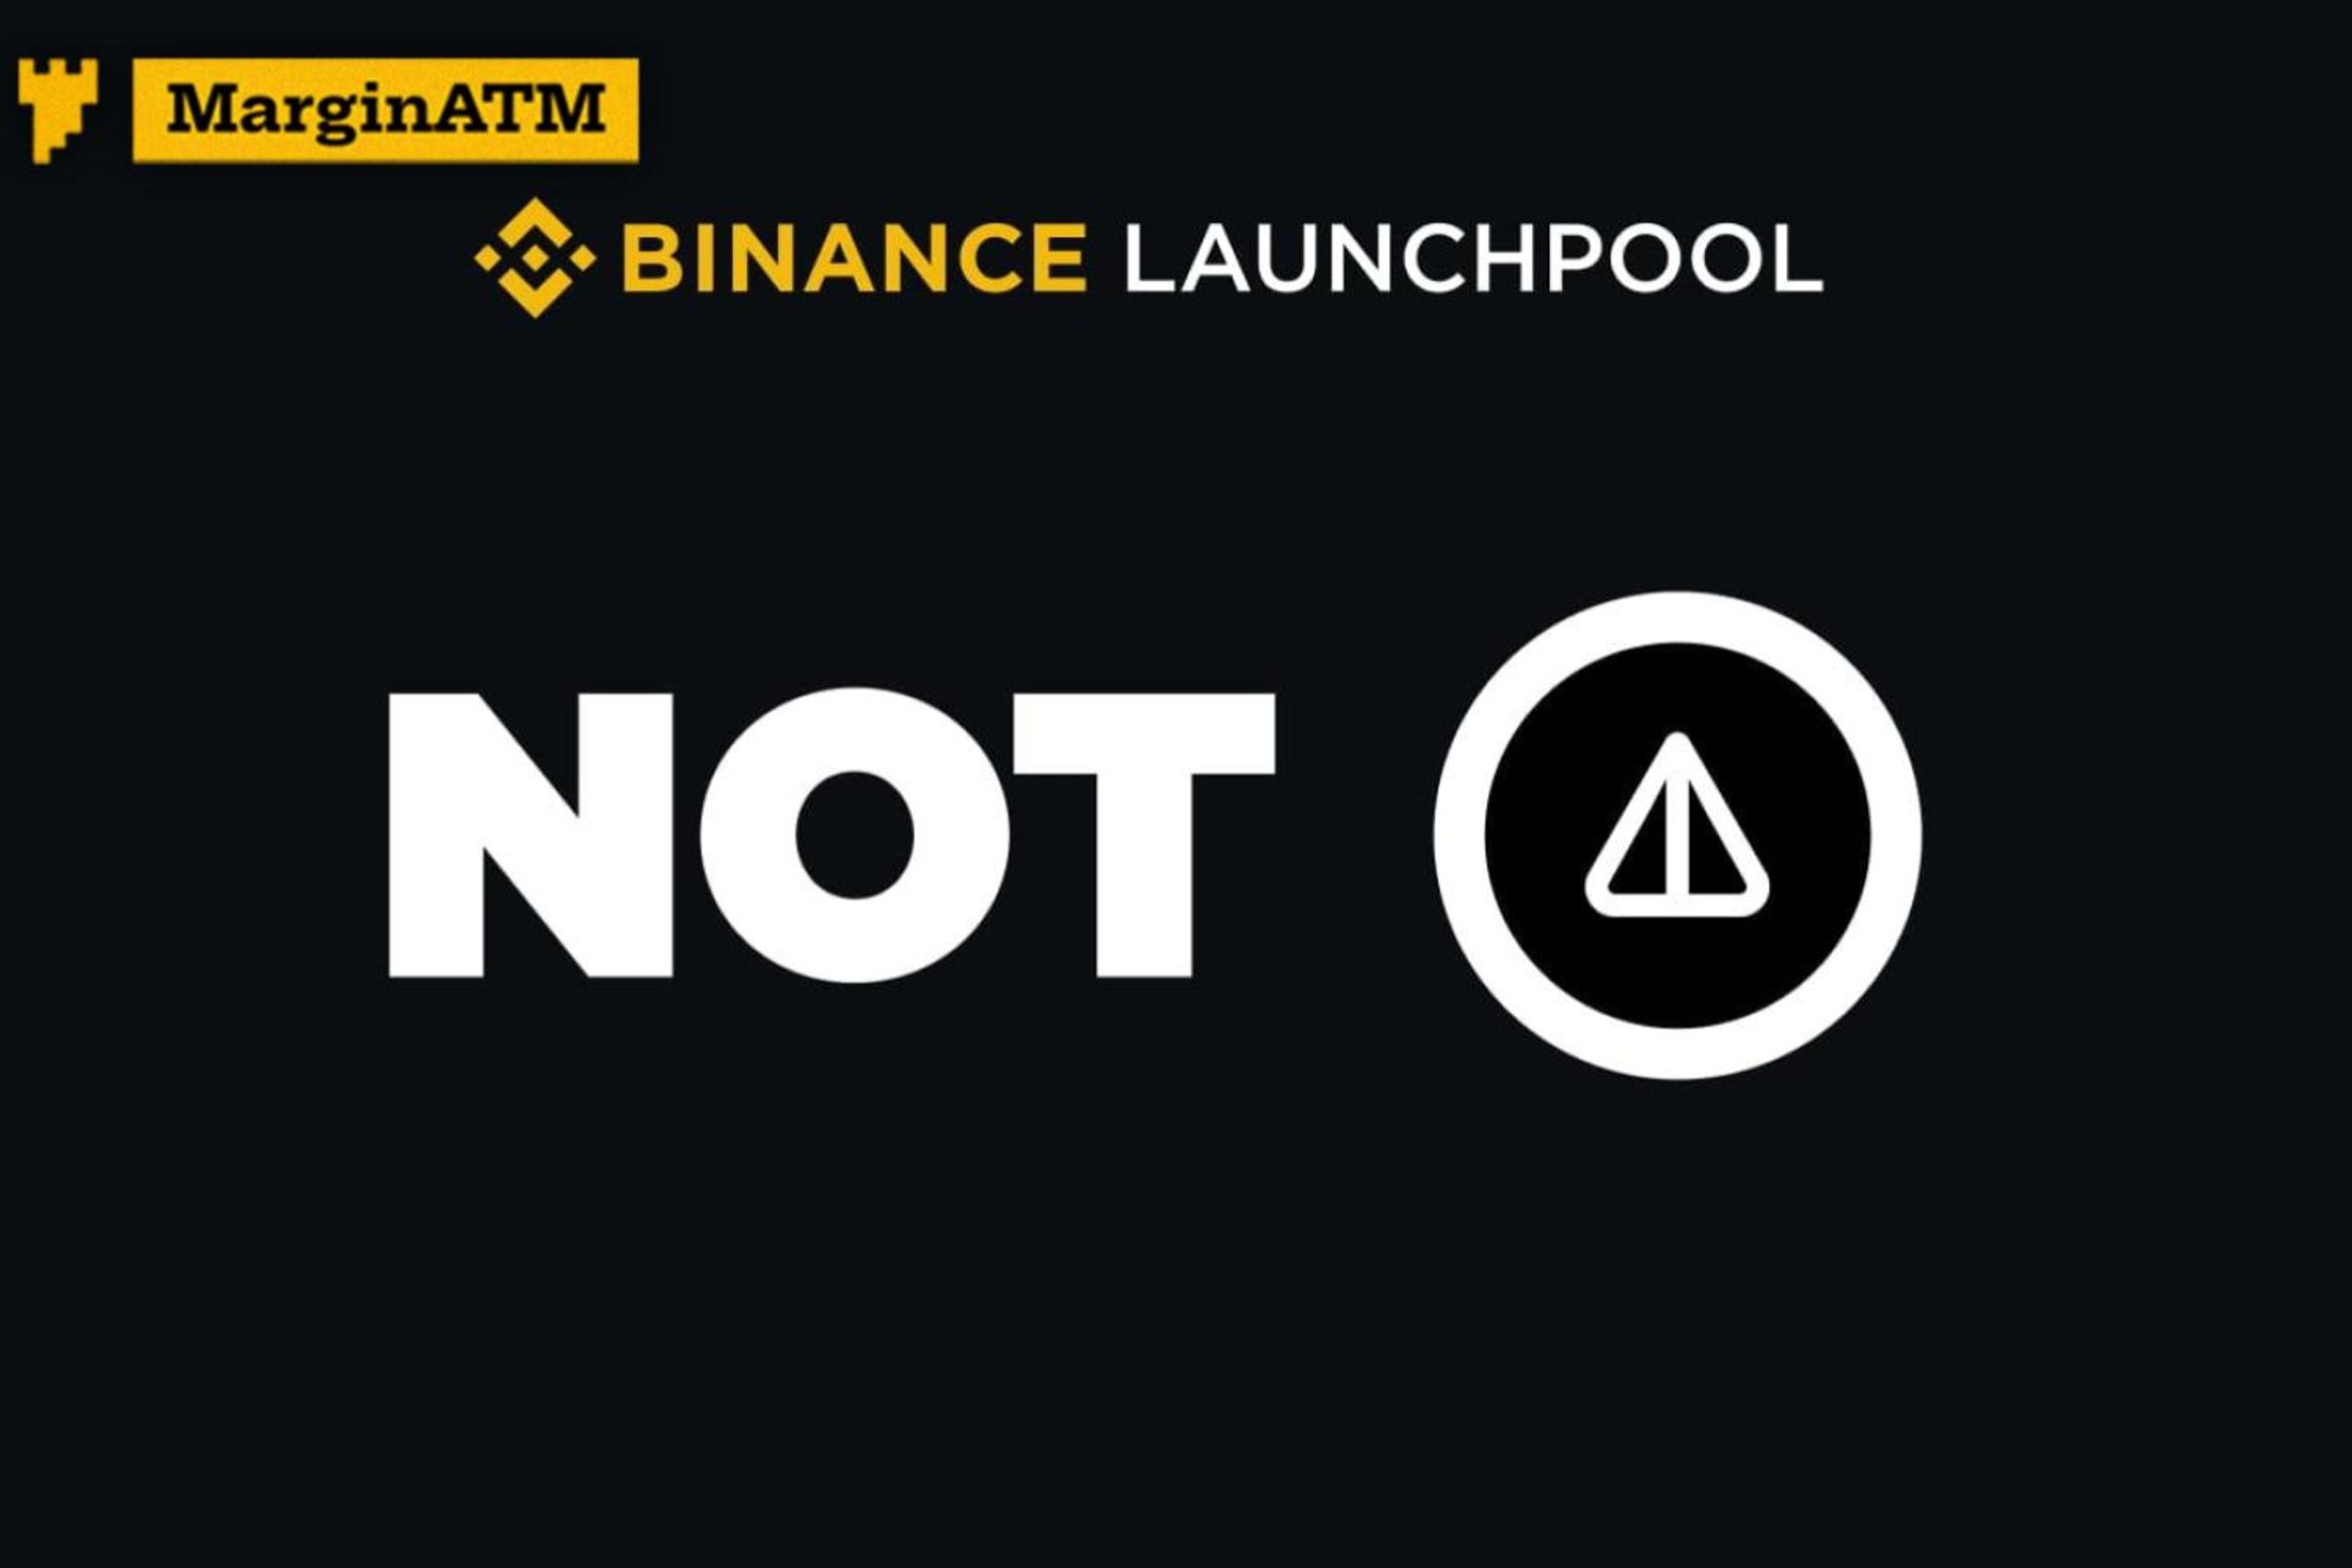 notcoin not binance launchpool